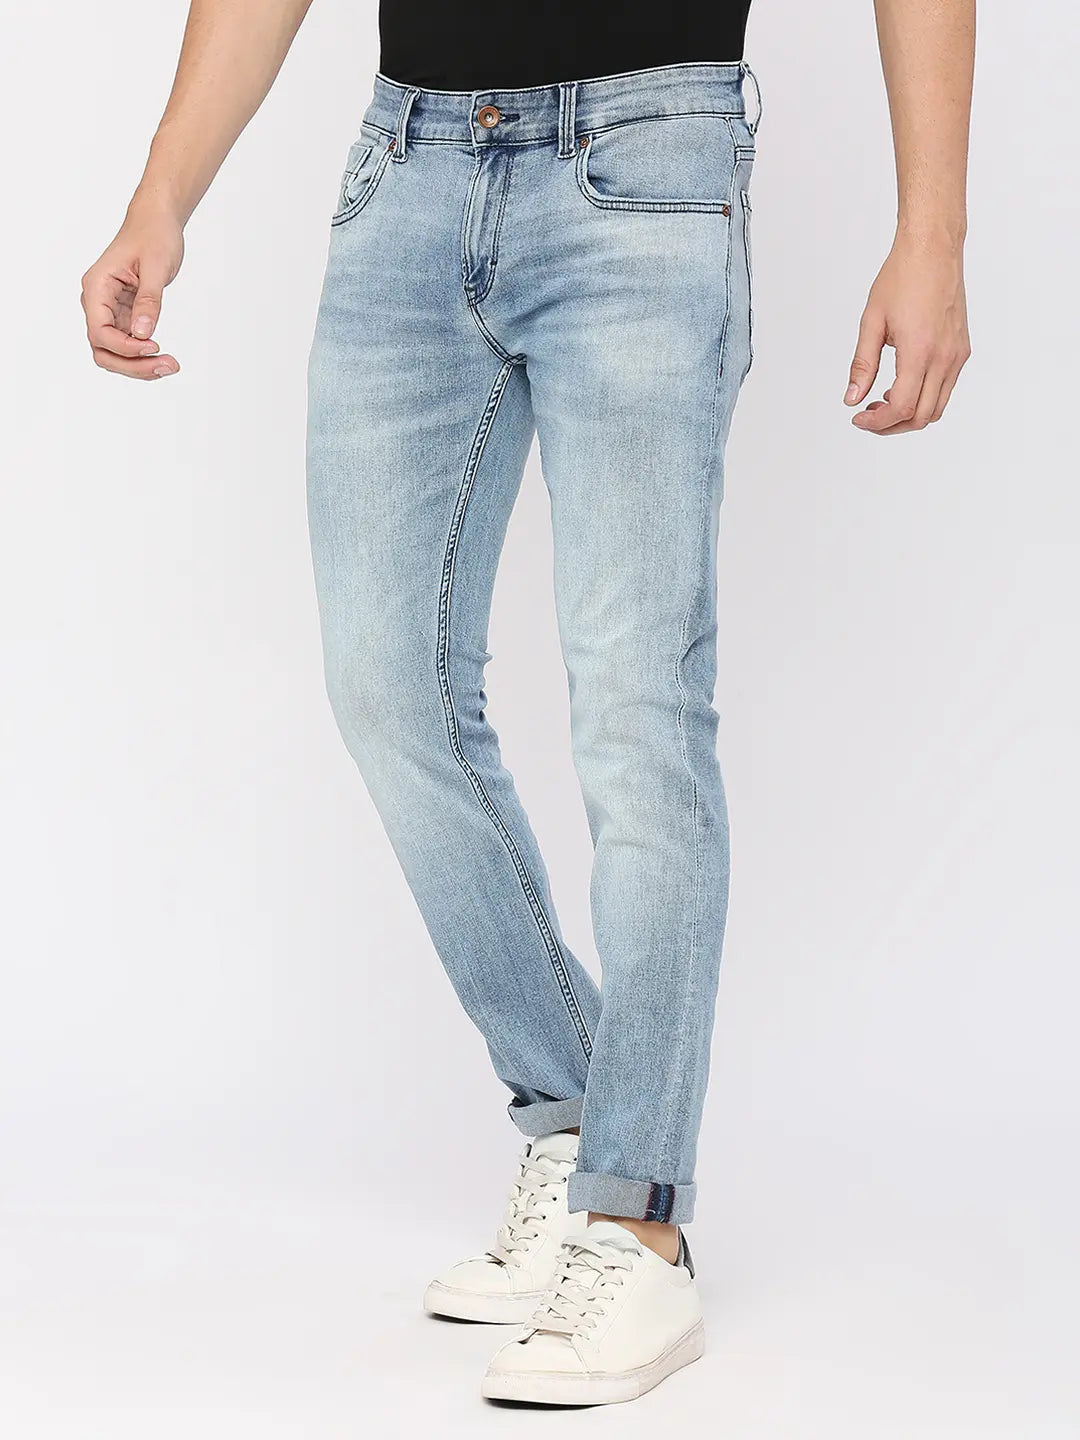 Buy Louis Philippe Jeans Men Blue Super Slim Fit Low Rise Light Fade  Stretchable Jeans - Jeans for Men 19068774 | Myntra